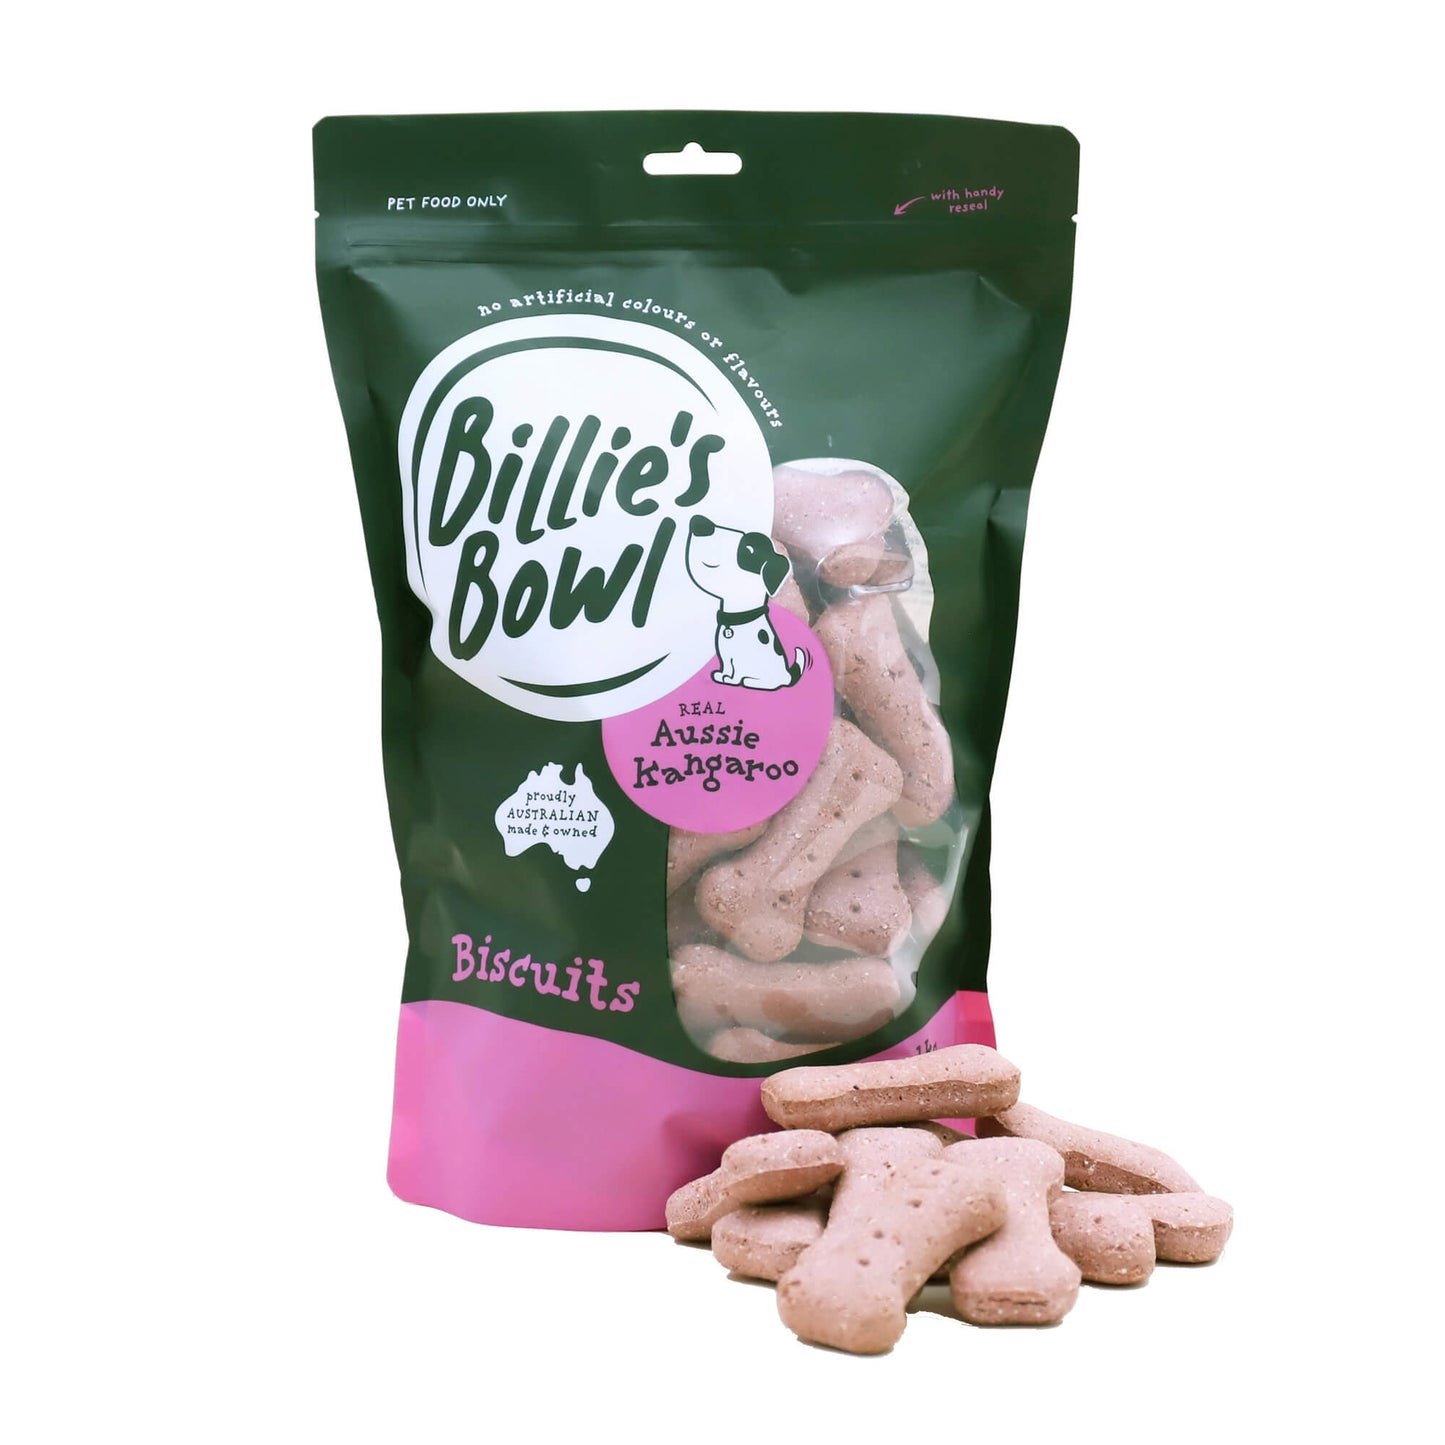 Billie's Bowl REAL Aussie Kangaroo Biscuit Dog Treats 1kg